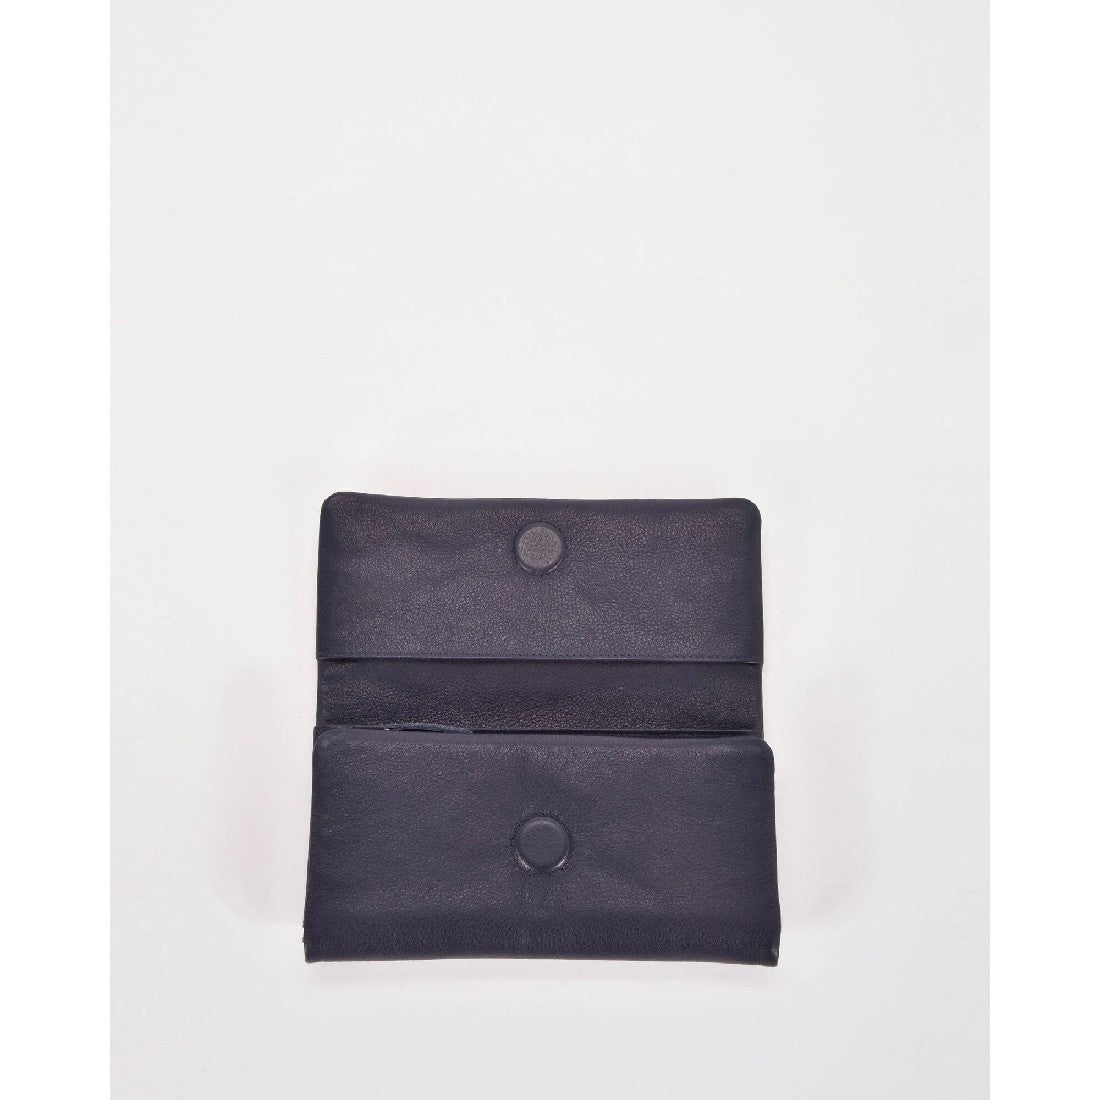 Gabee Nina Leather Wallet